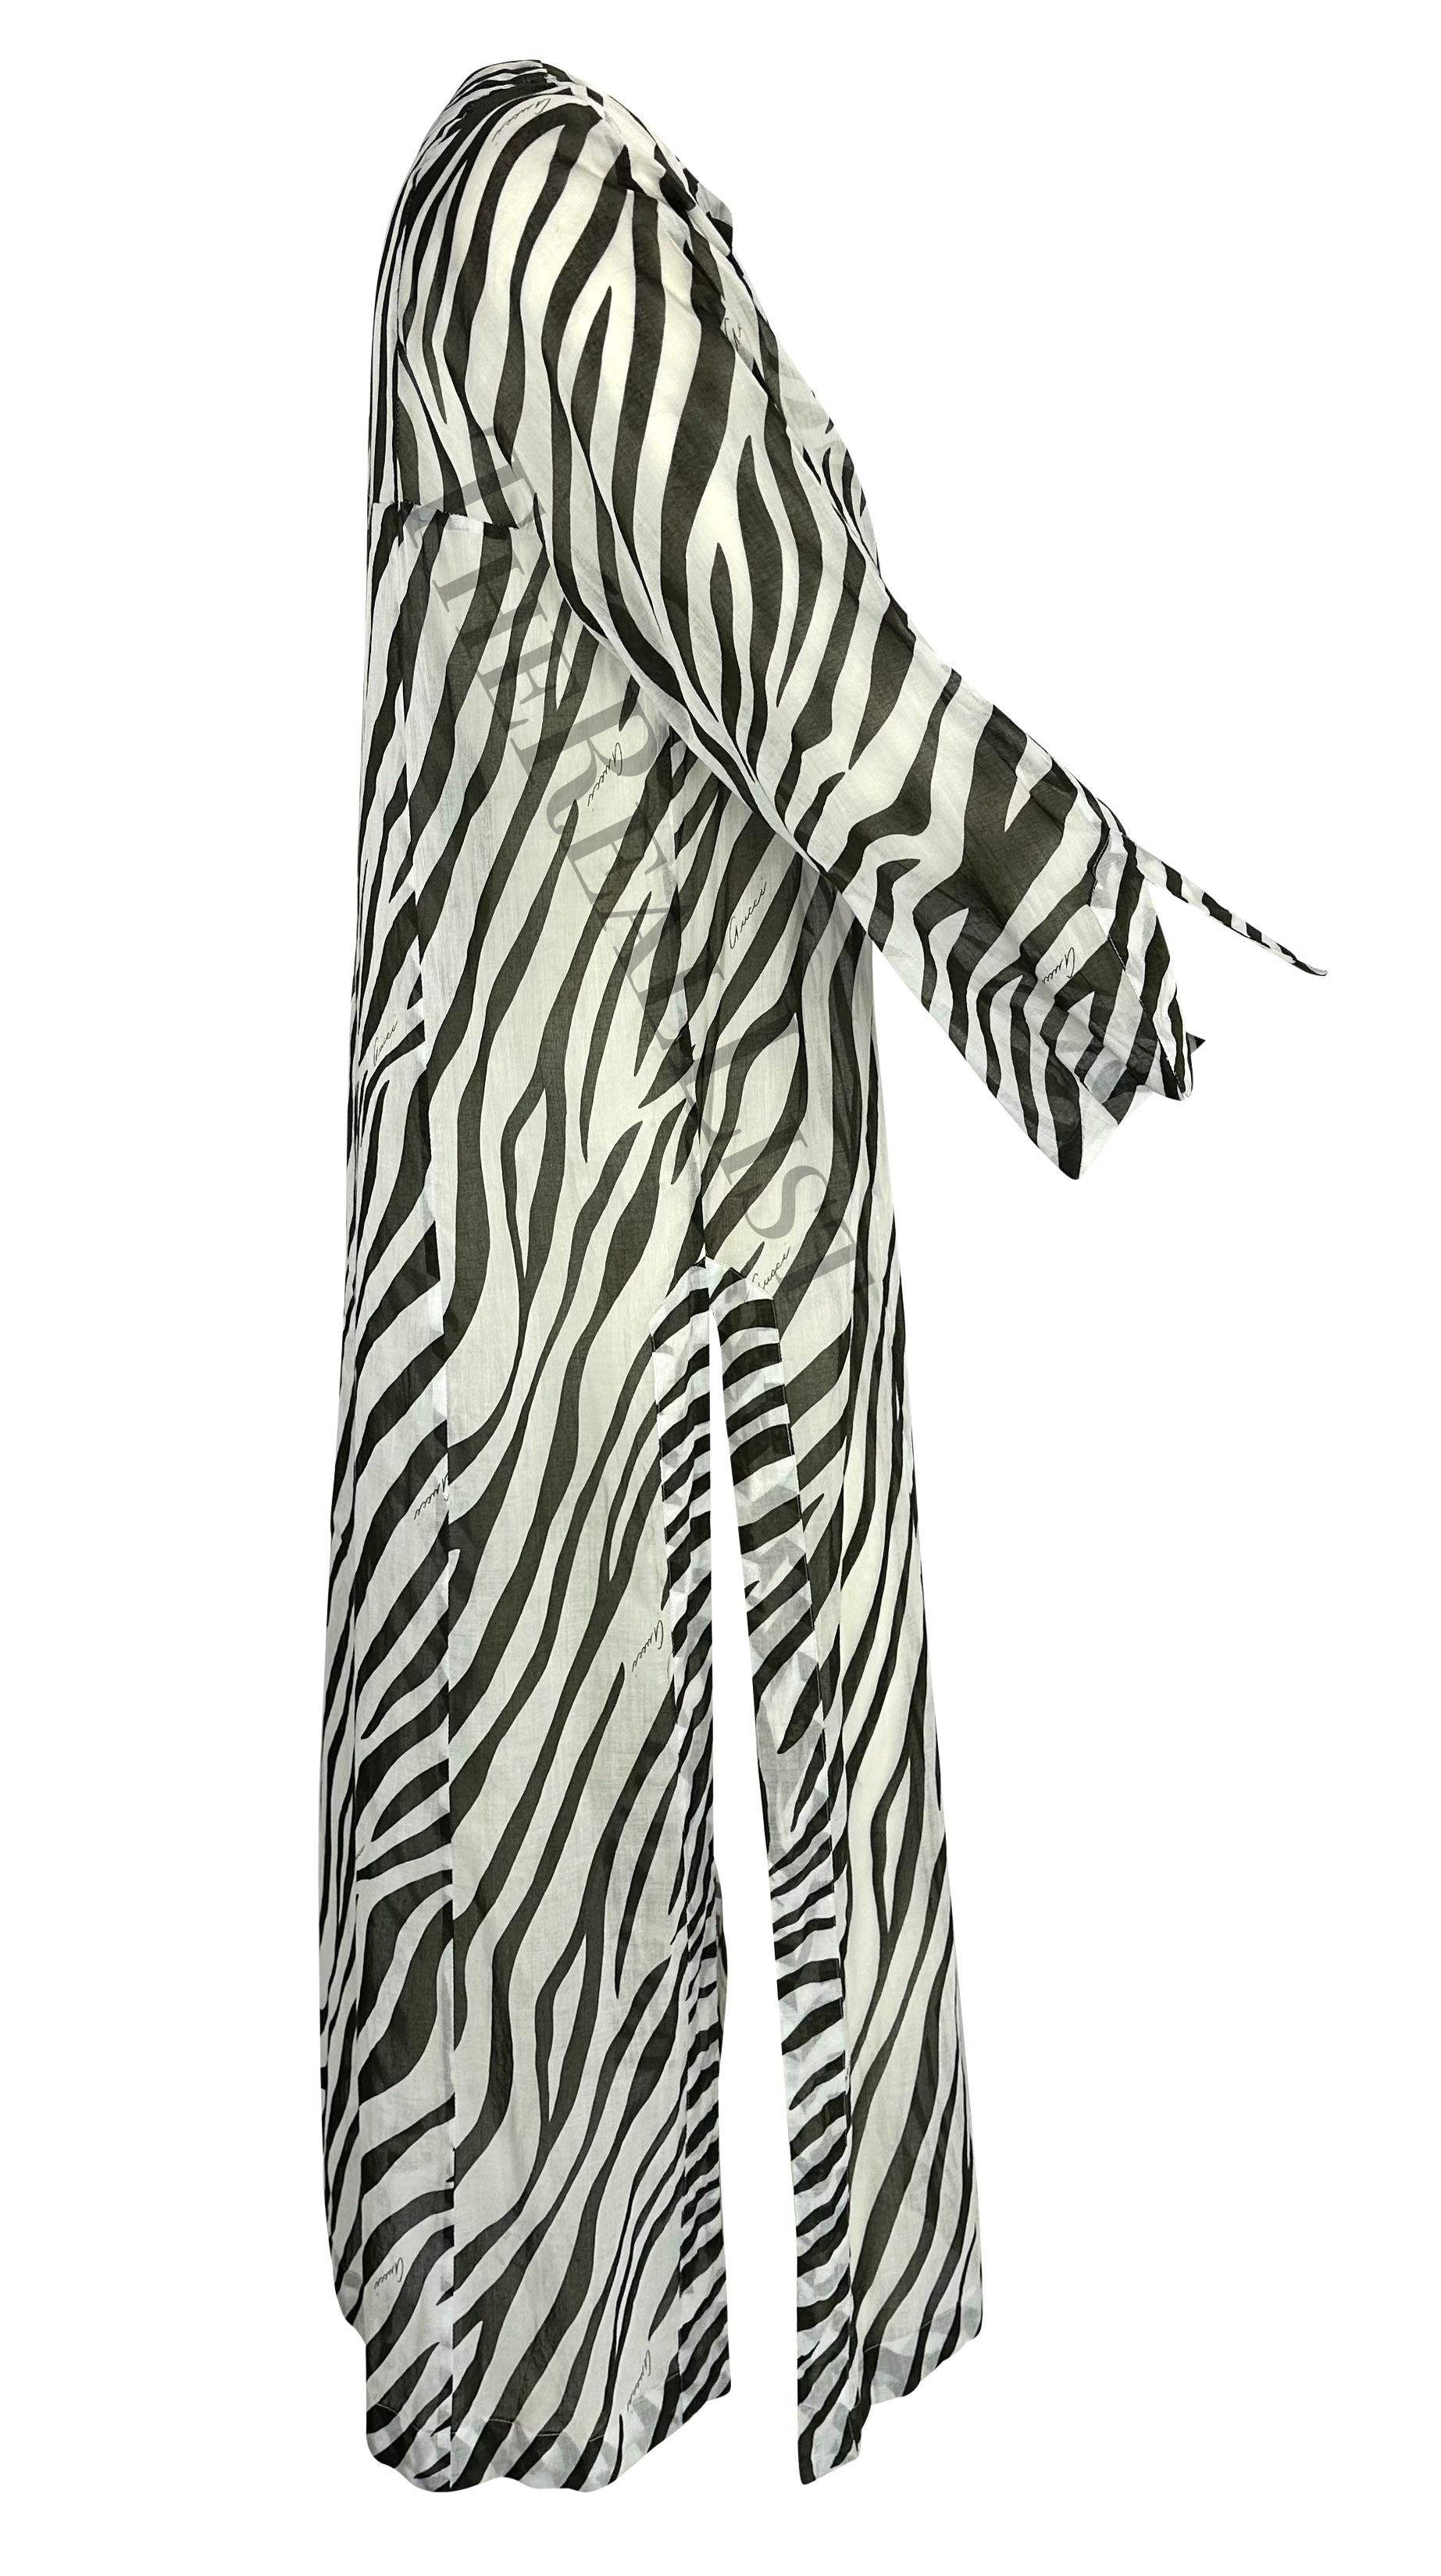 S/S 1996 Gucci by Tom Ford Runway Black White Zebra Print Sheer Kaftan Dress For Sale 5